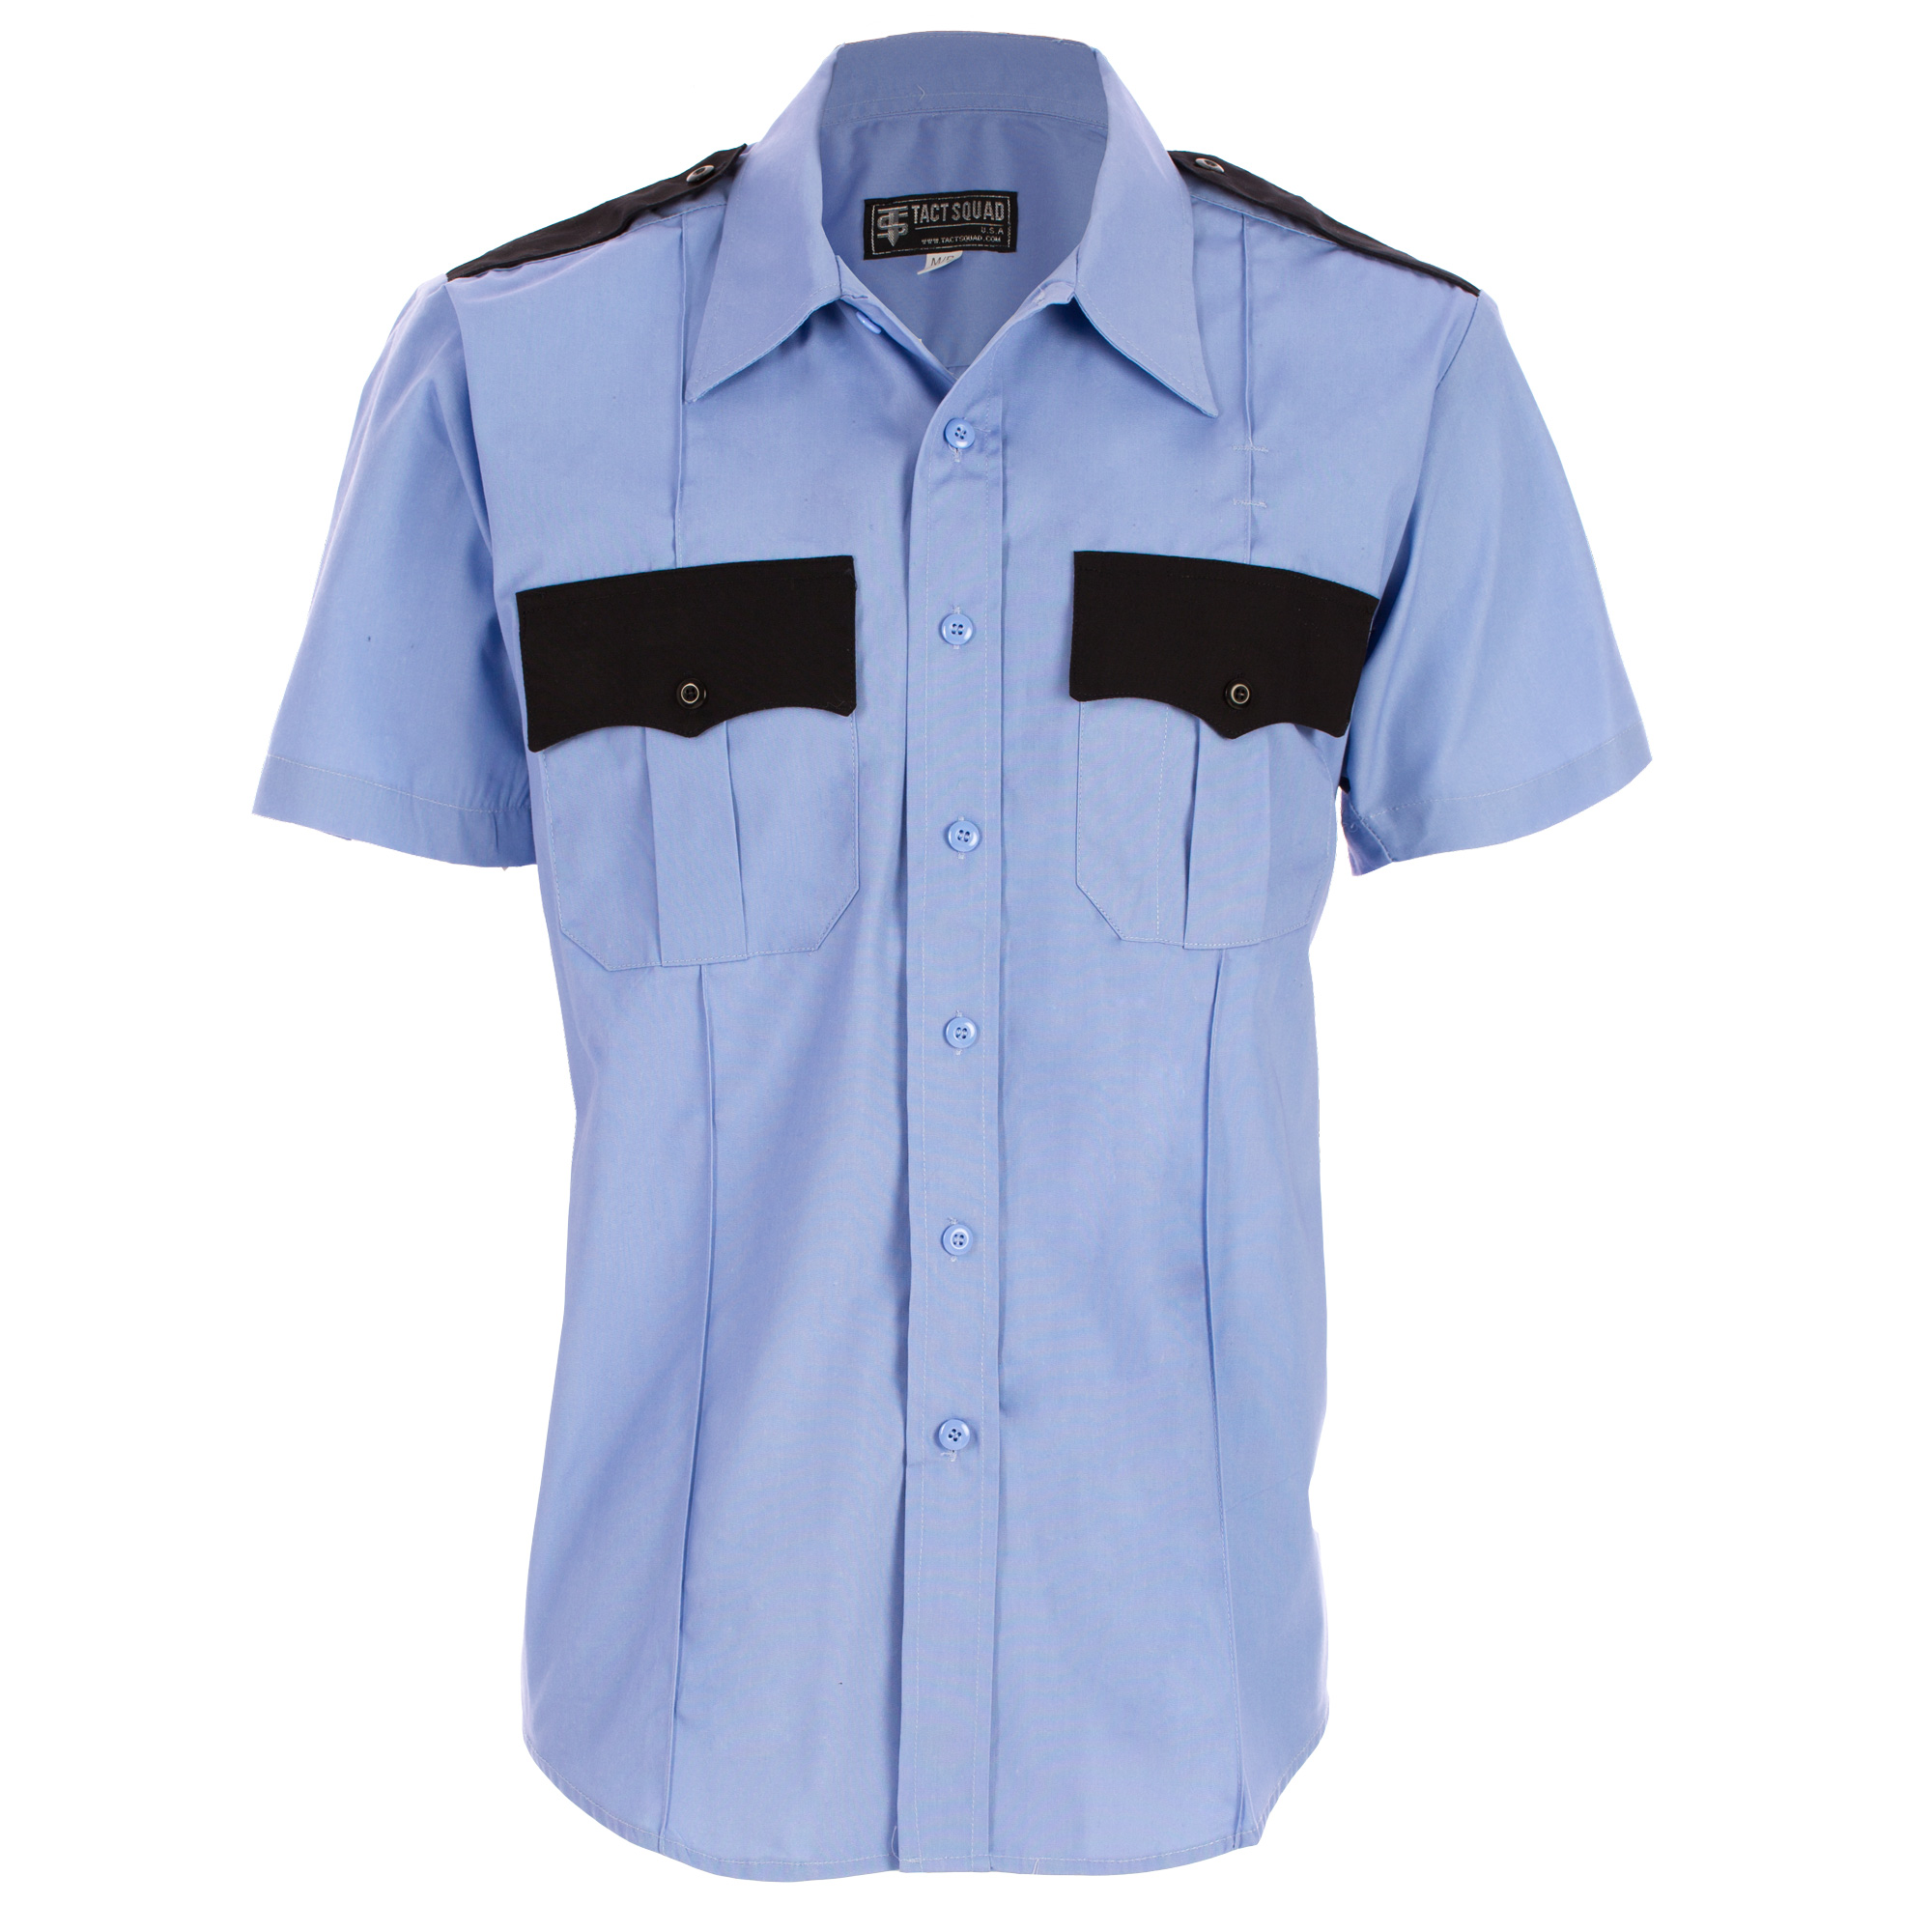 Rothco Navy Blue Short Sleeve Uniform Shirt 